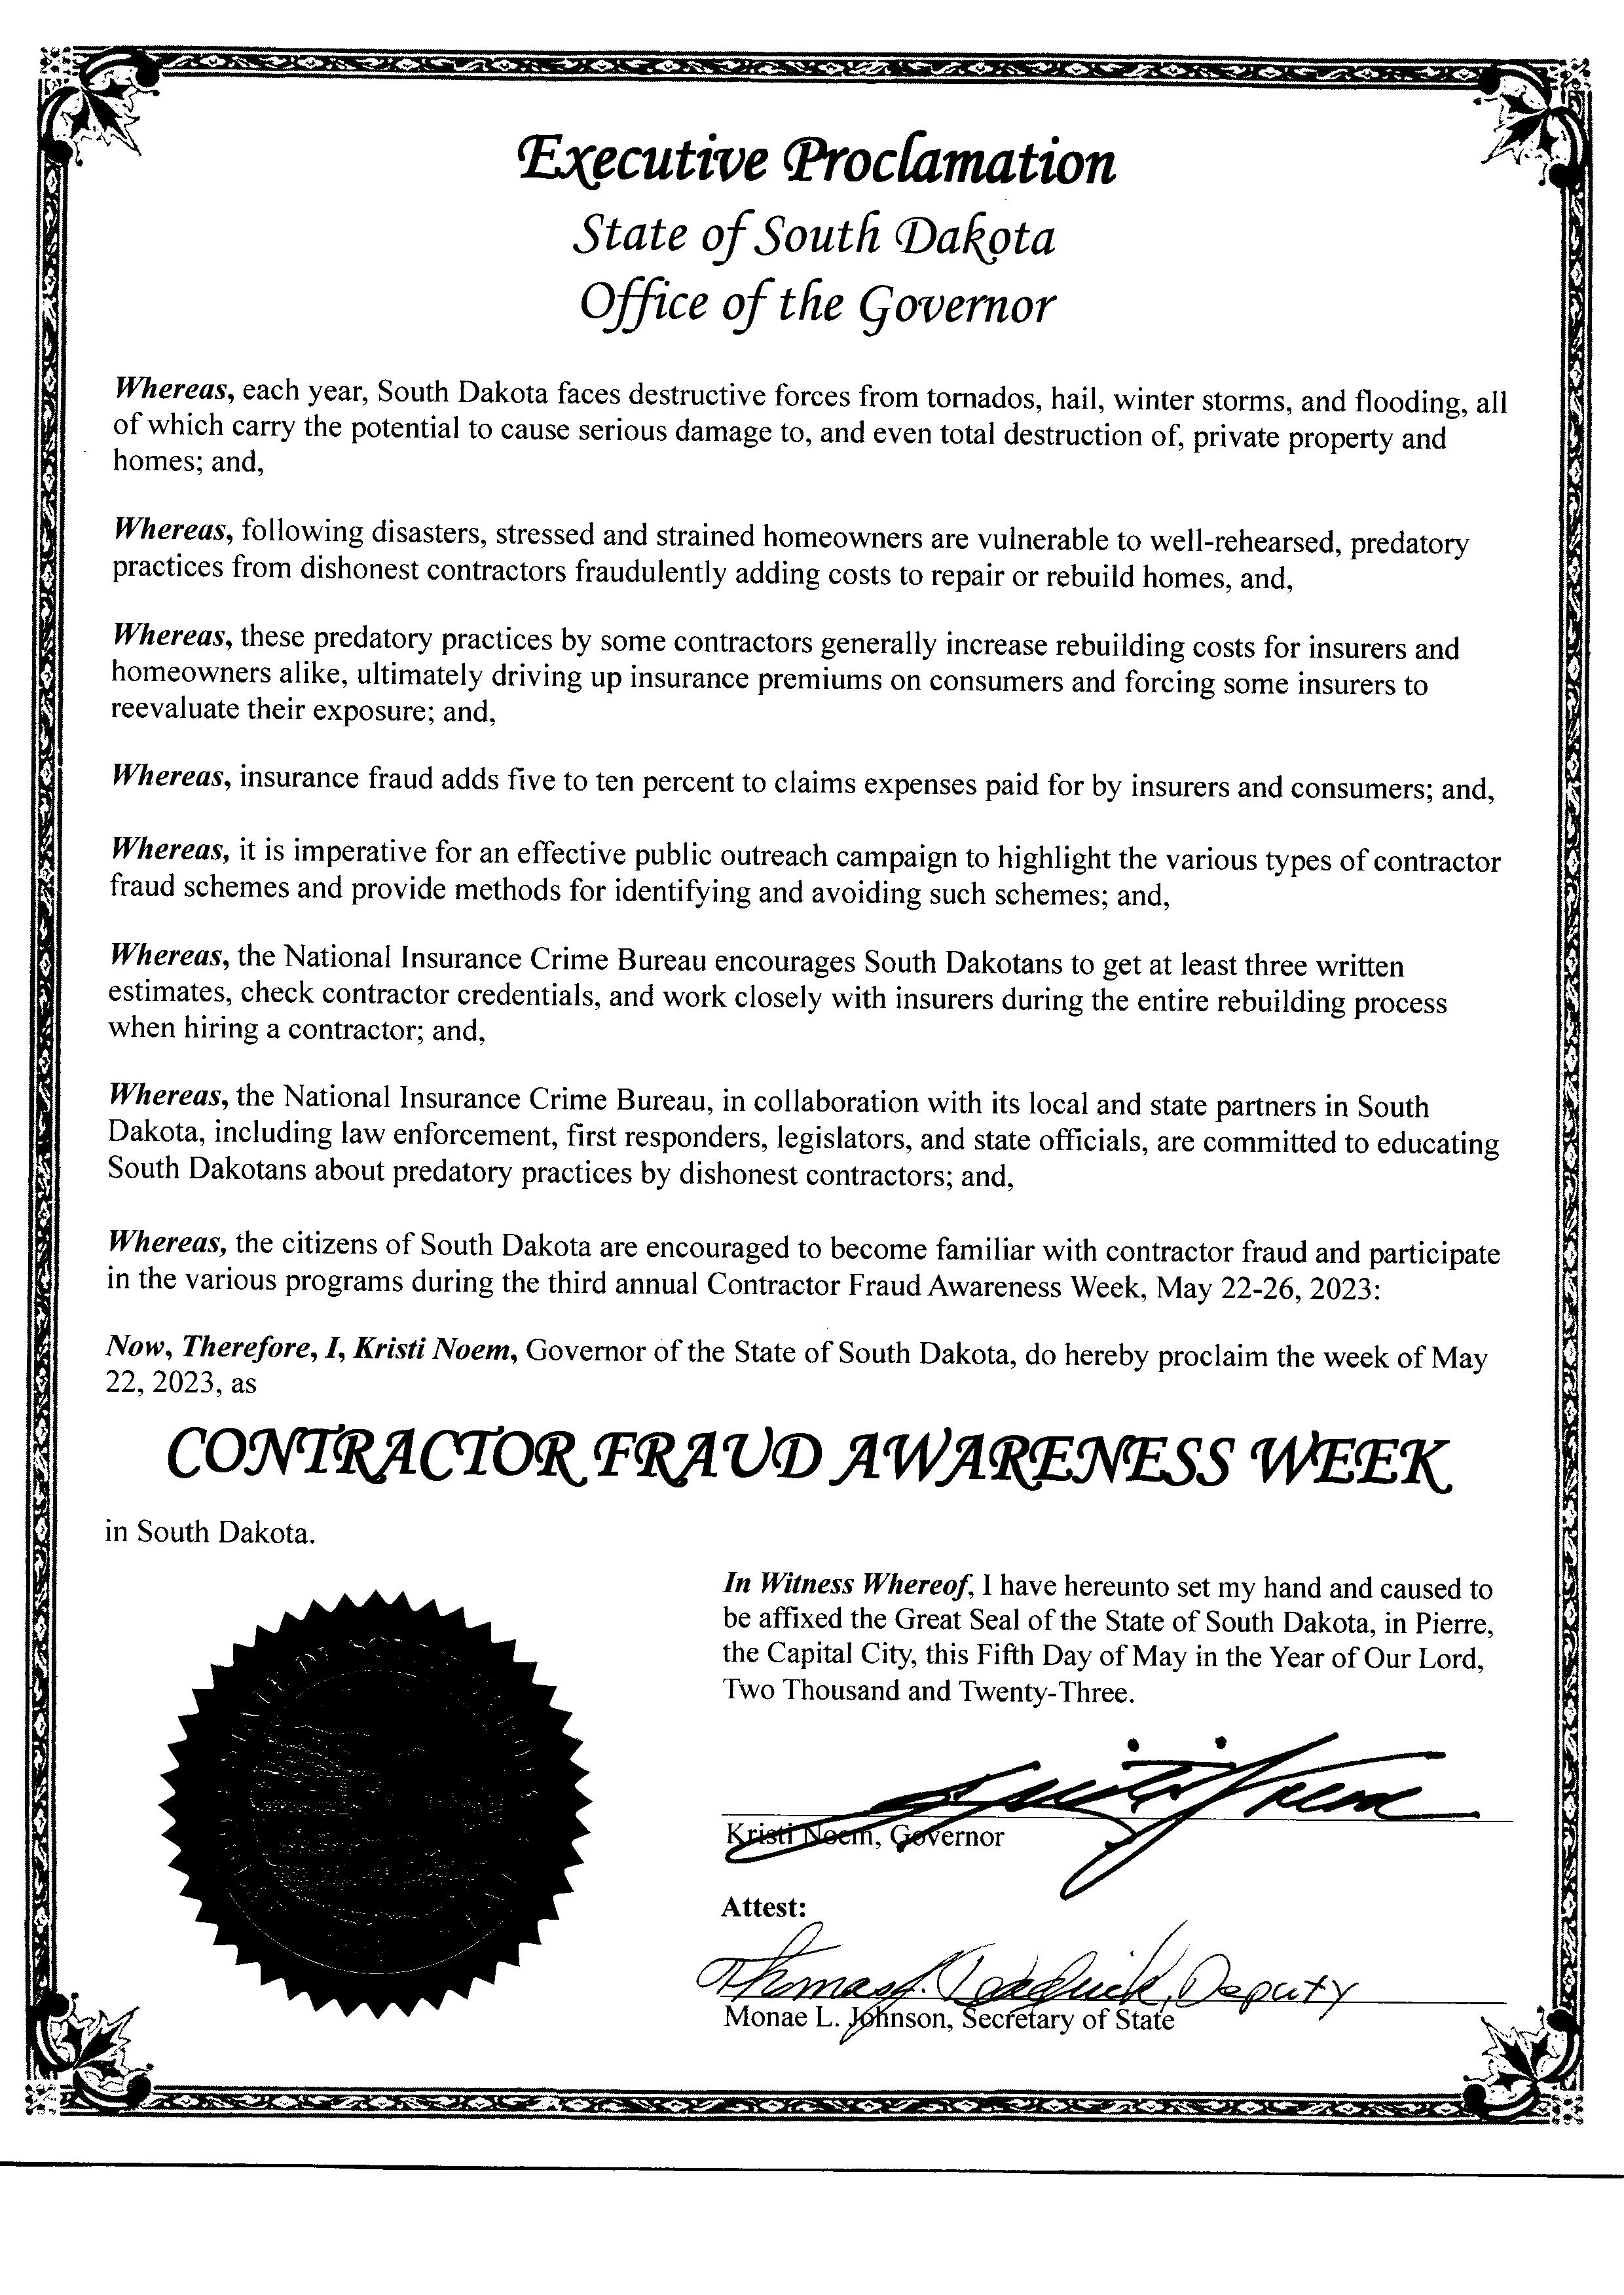 Proclamation of Contractor Fraud Awareness Week 2023 in South Dakota